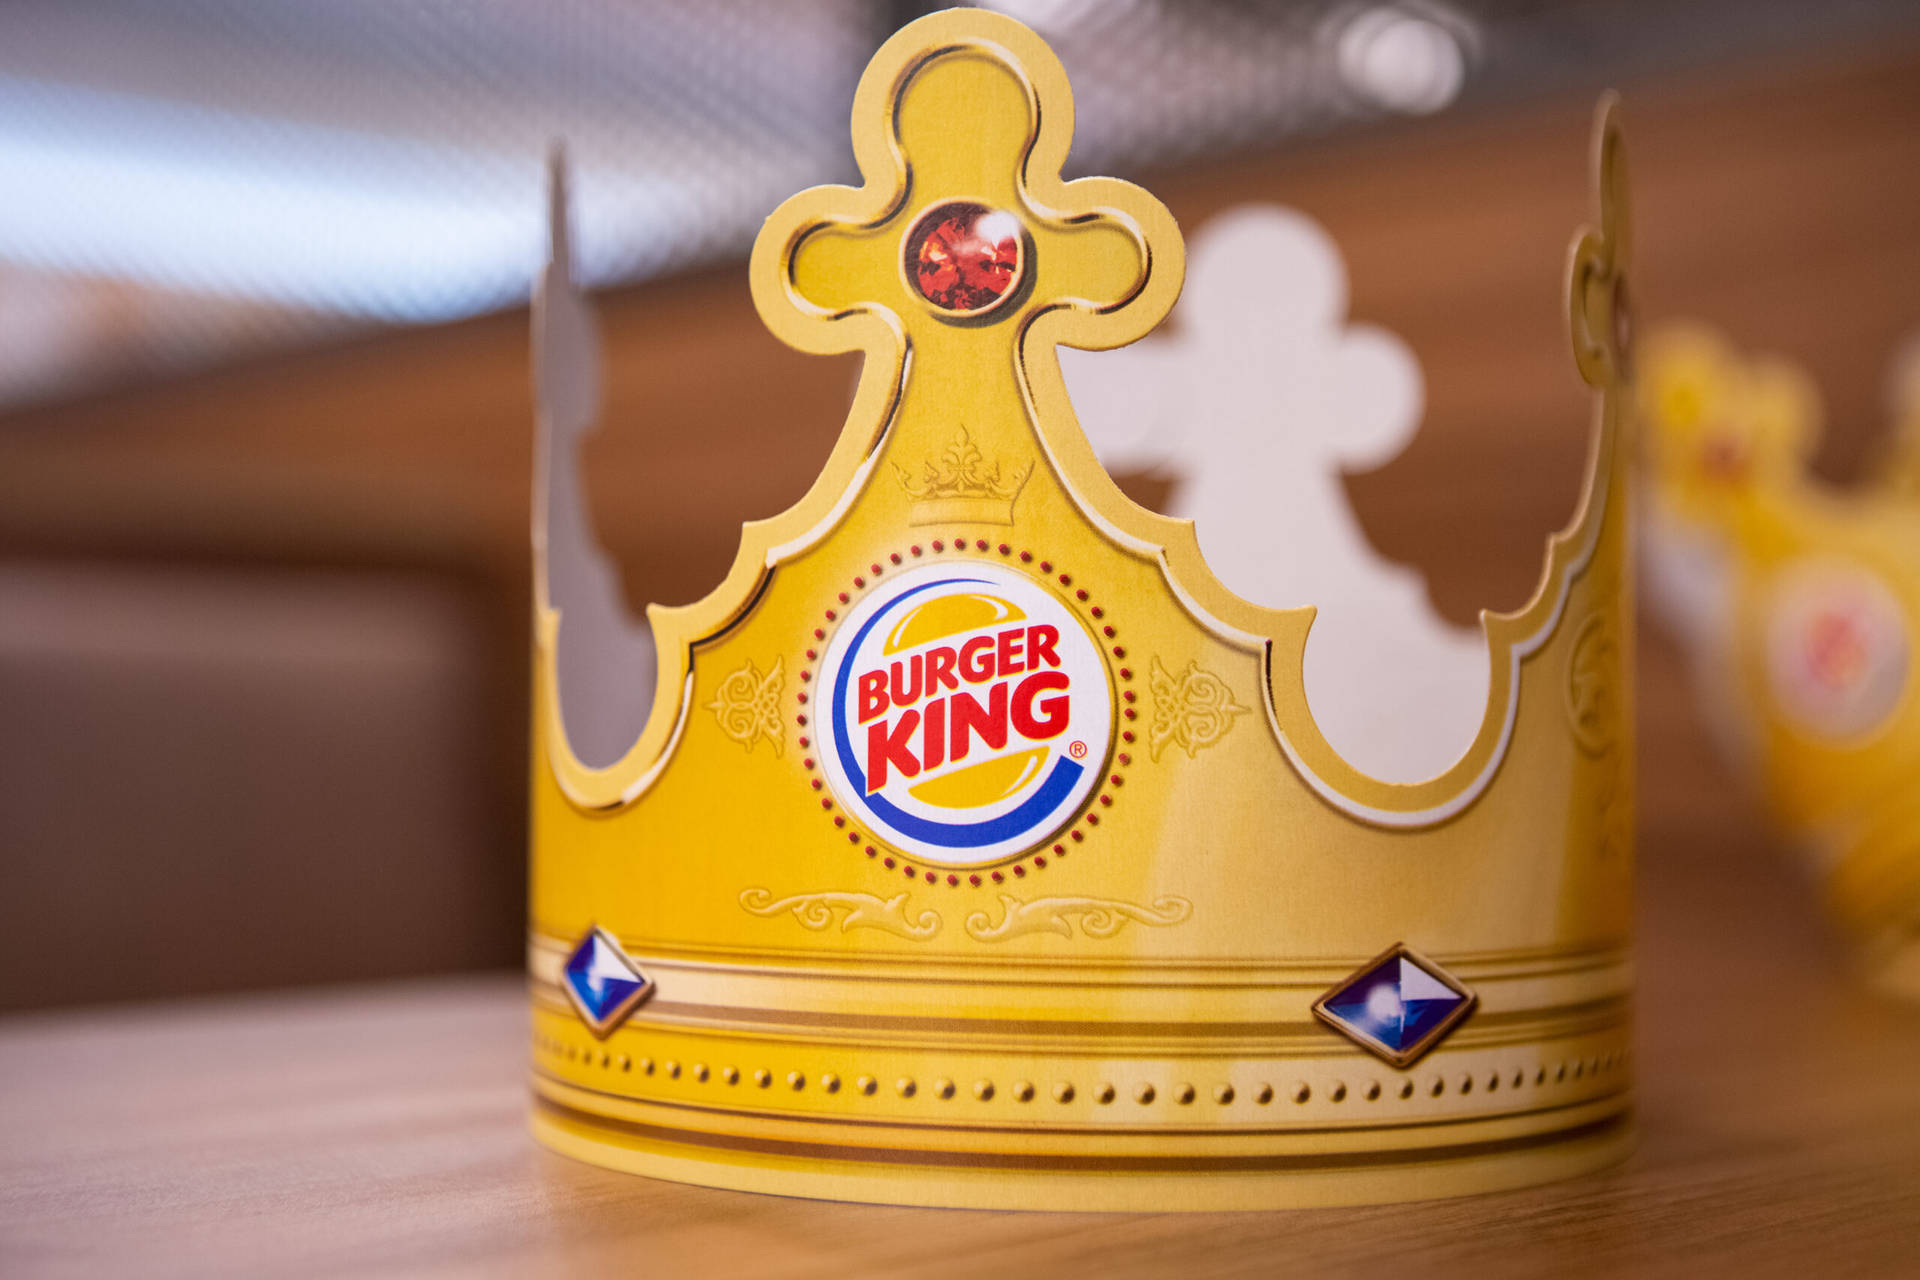 Top 999+ Burger King Wallpaper Full HD, 4K Free to Use